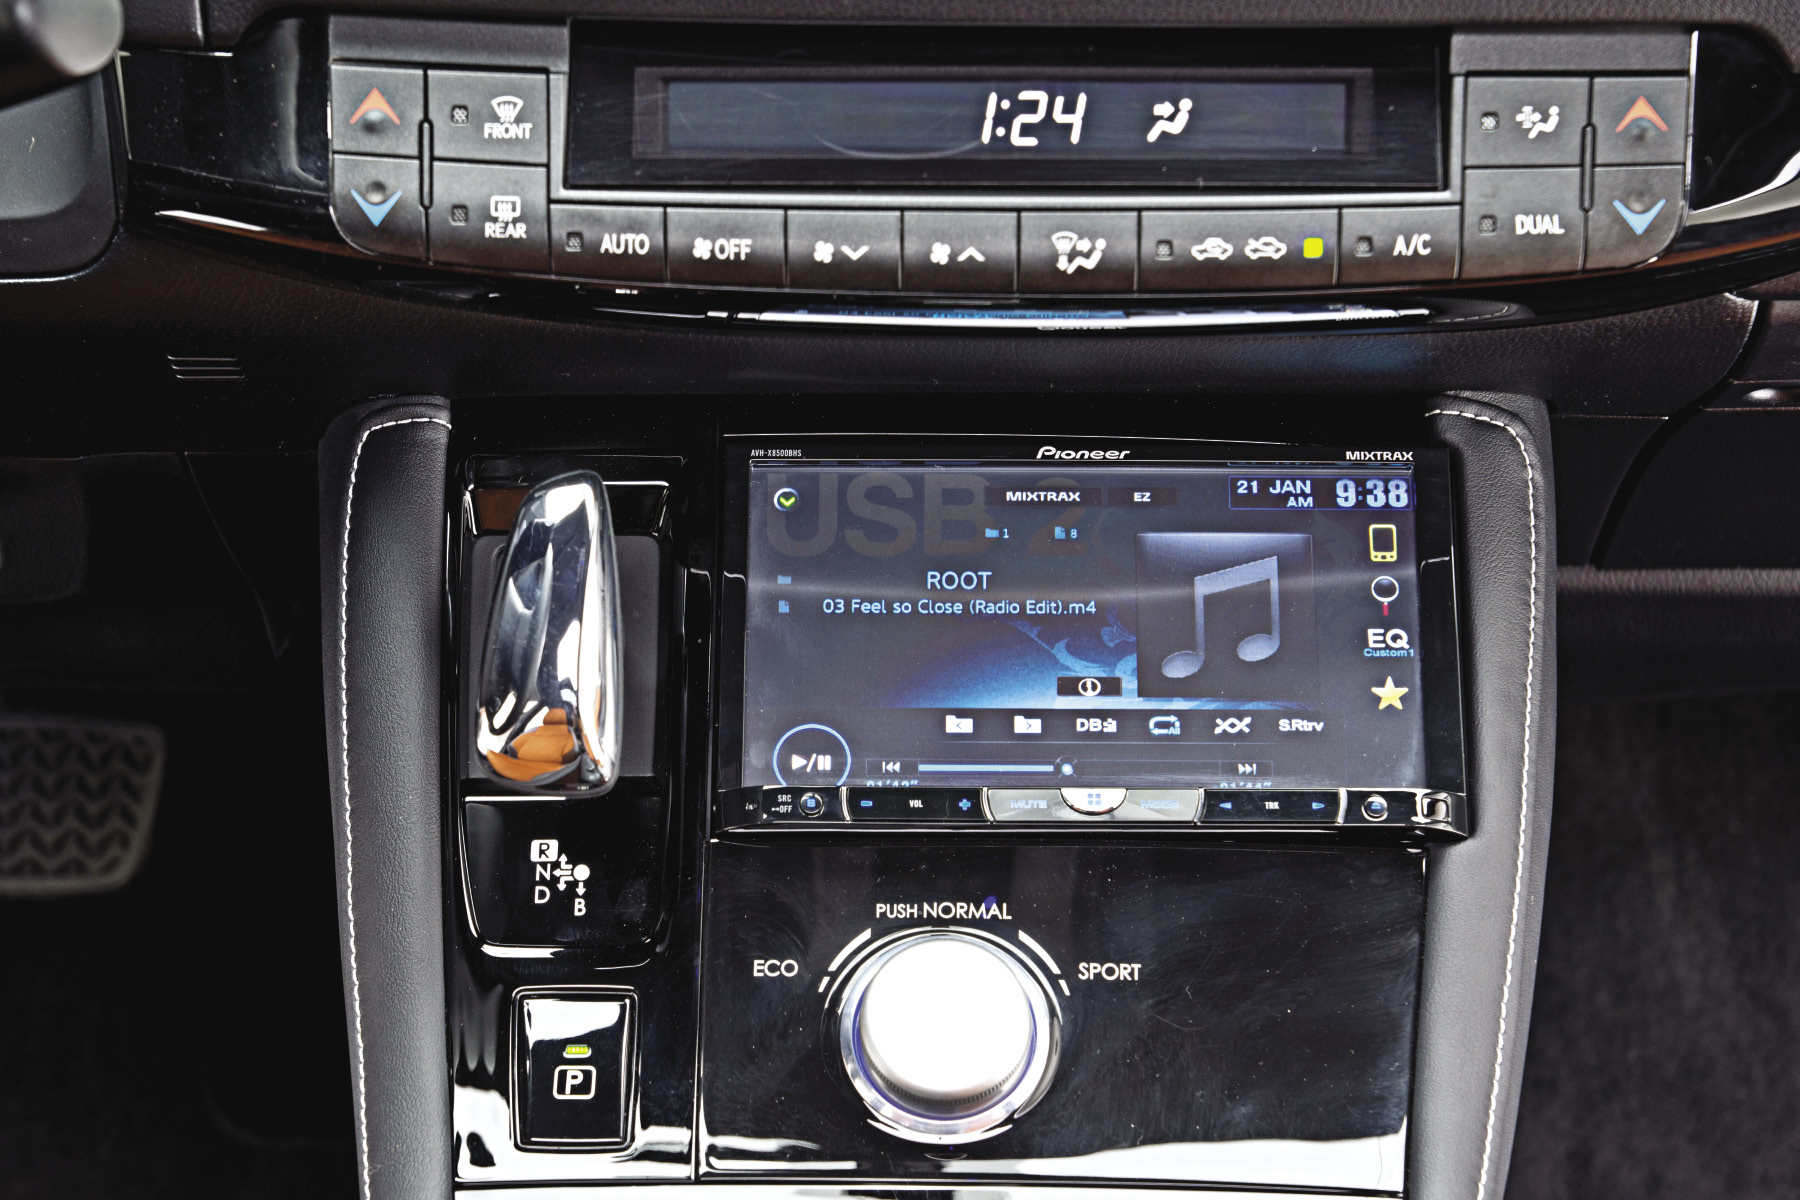 Electrified: 2013 Lexus CT200H